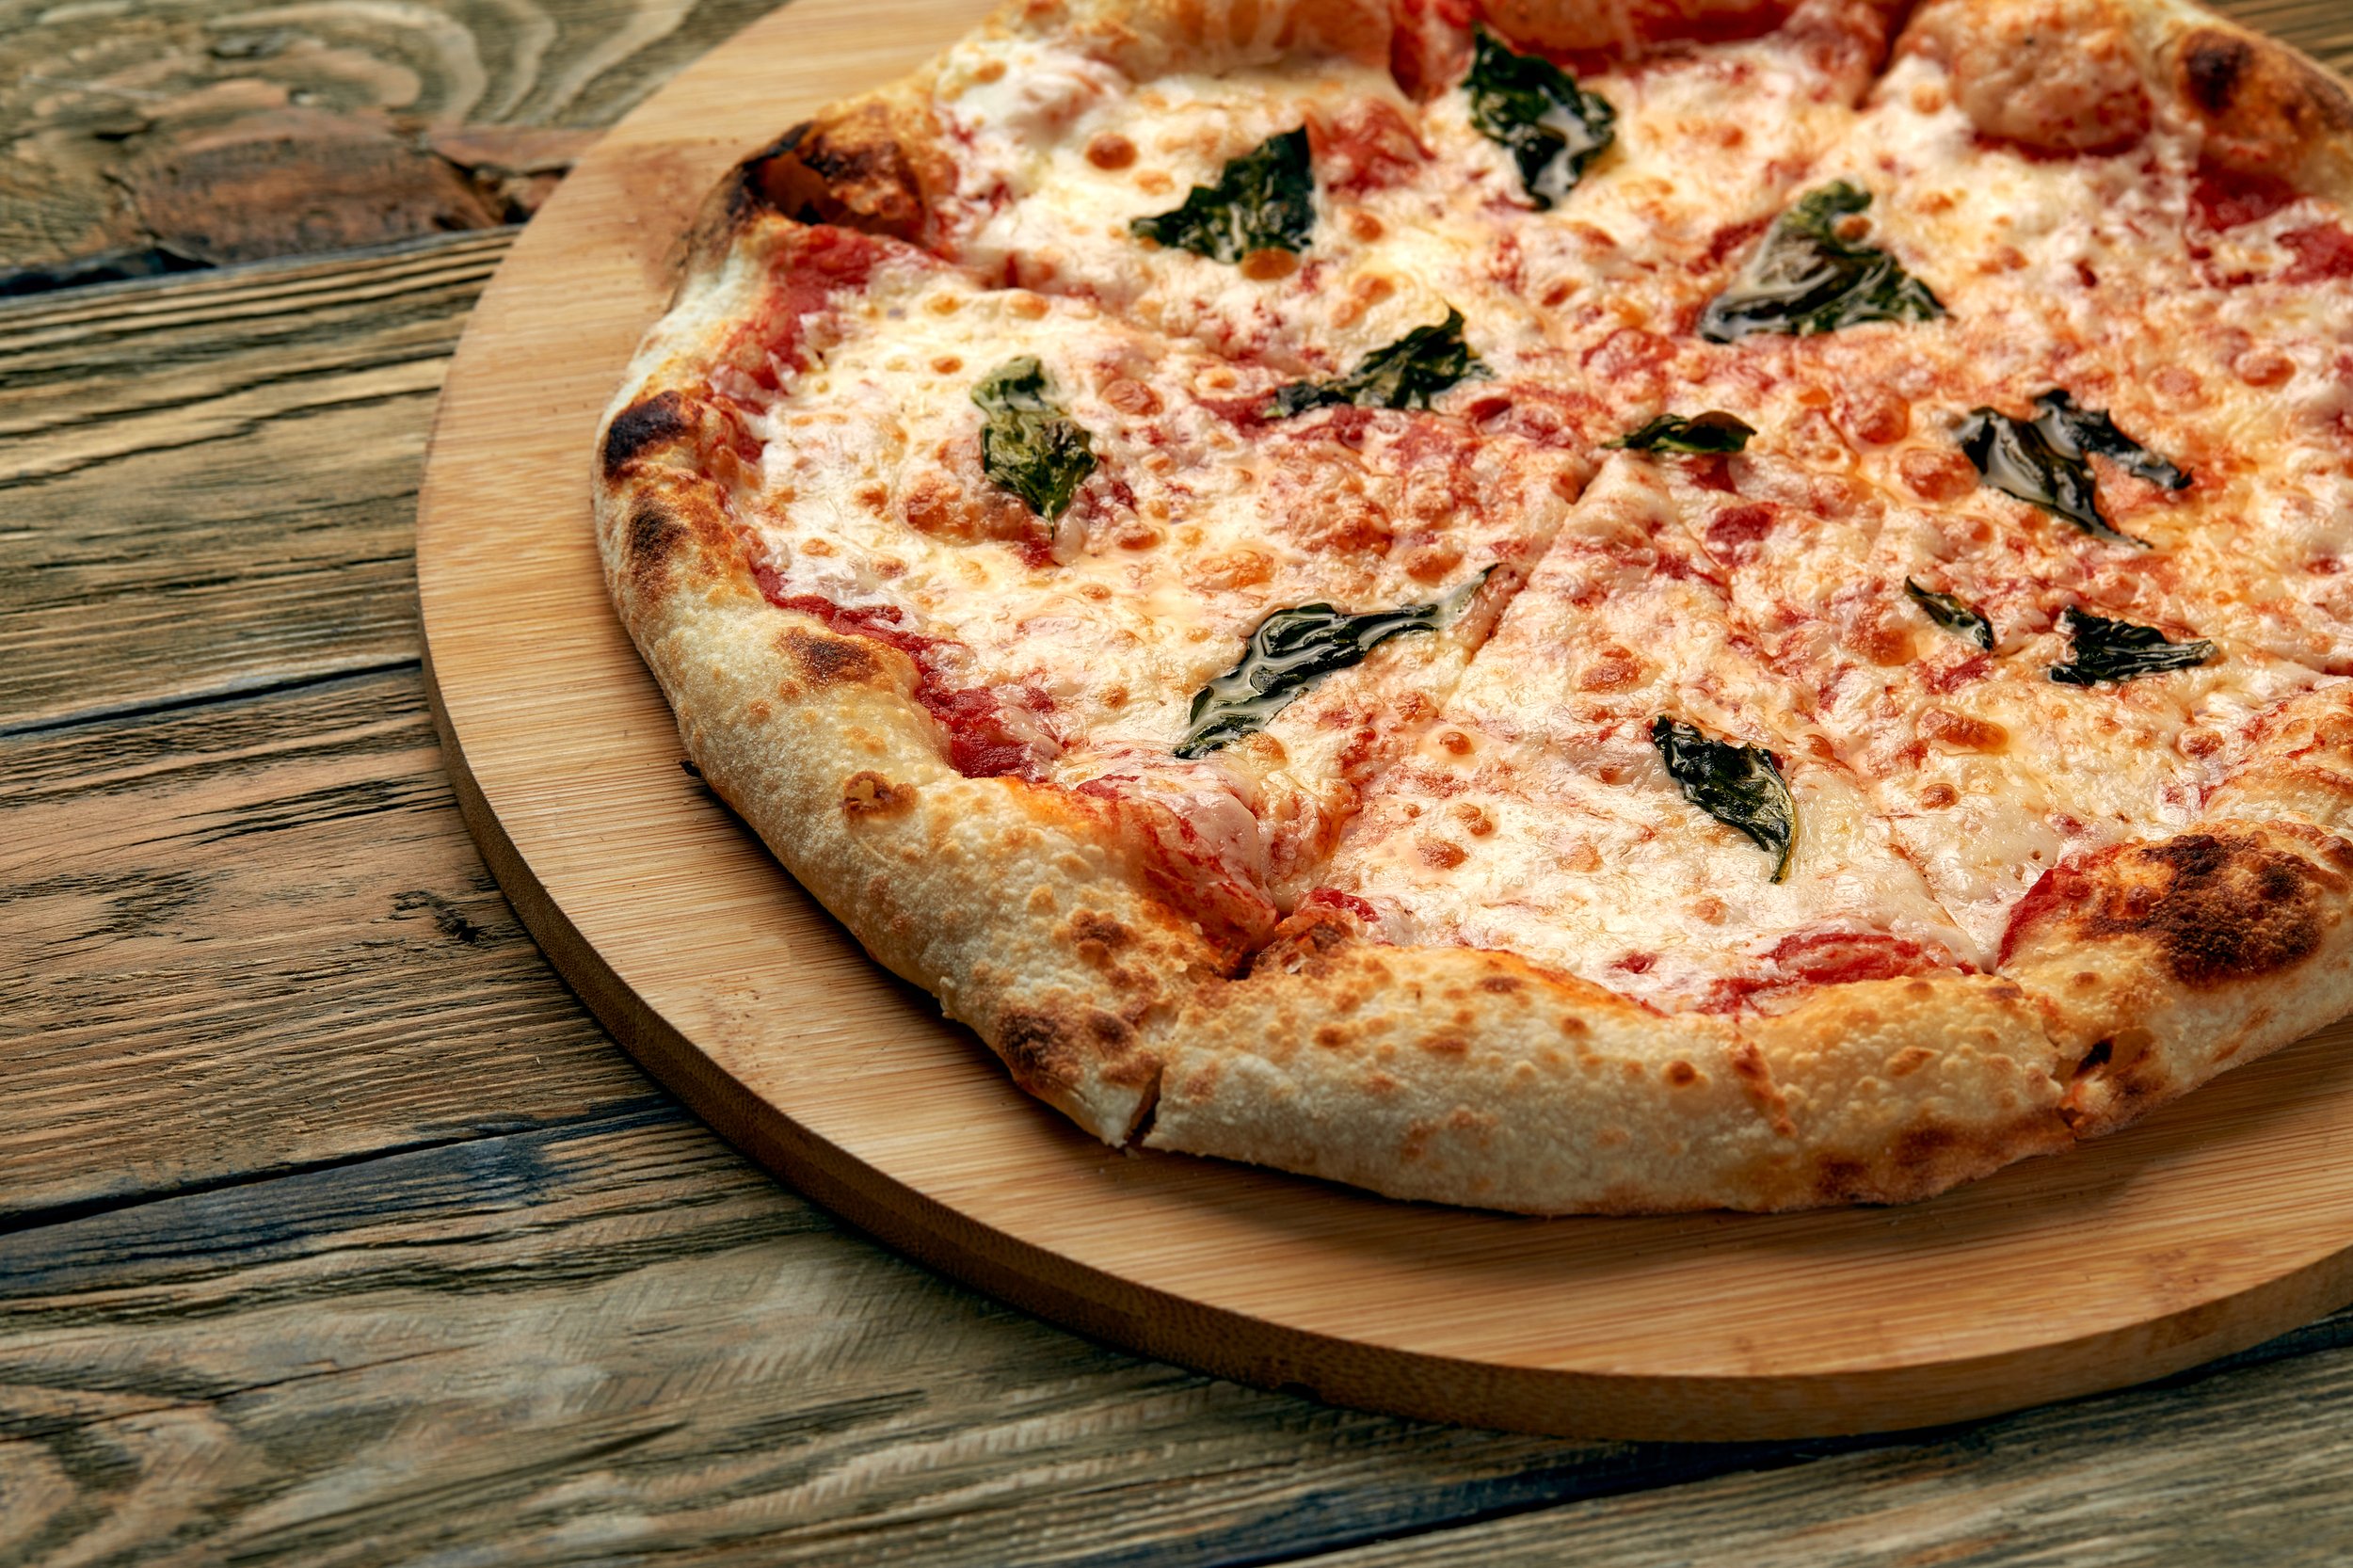 whole-neapolitan-pizza-served-wooden-board.jpg